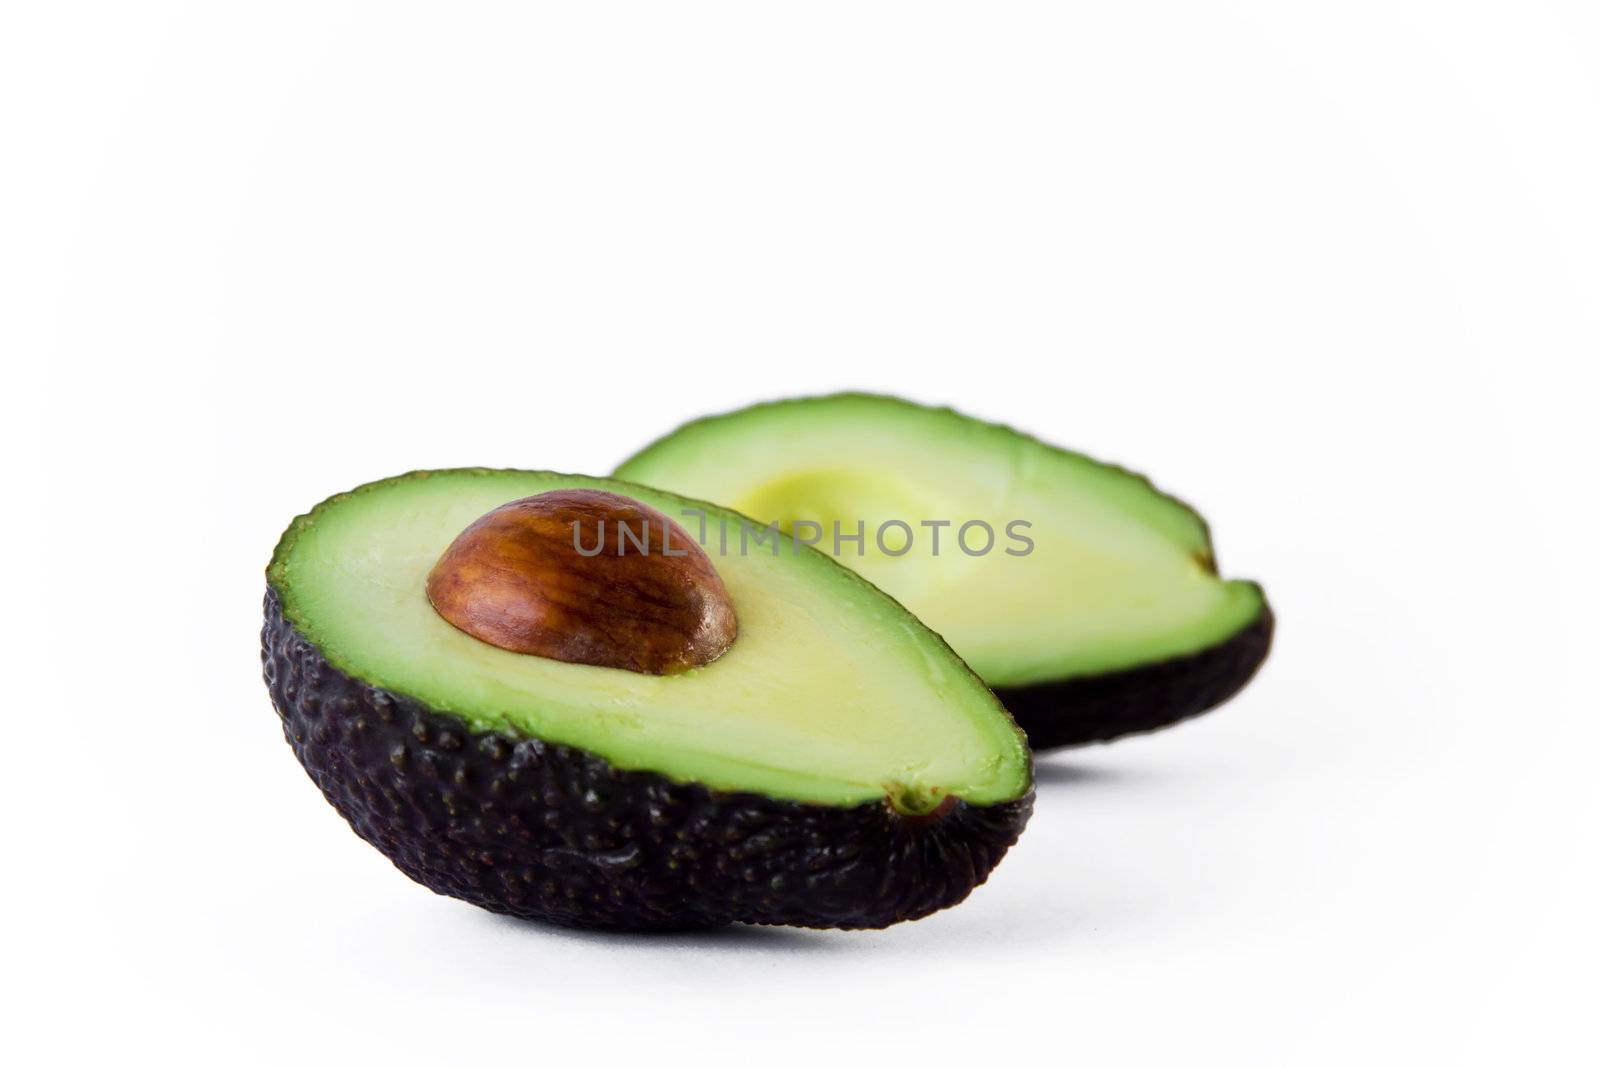 A green ripe avocado cut in half